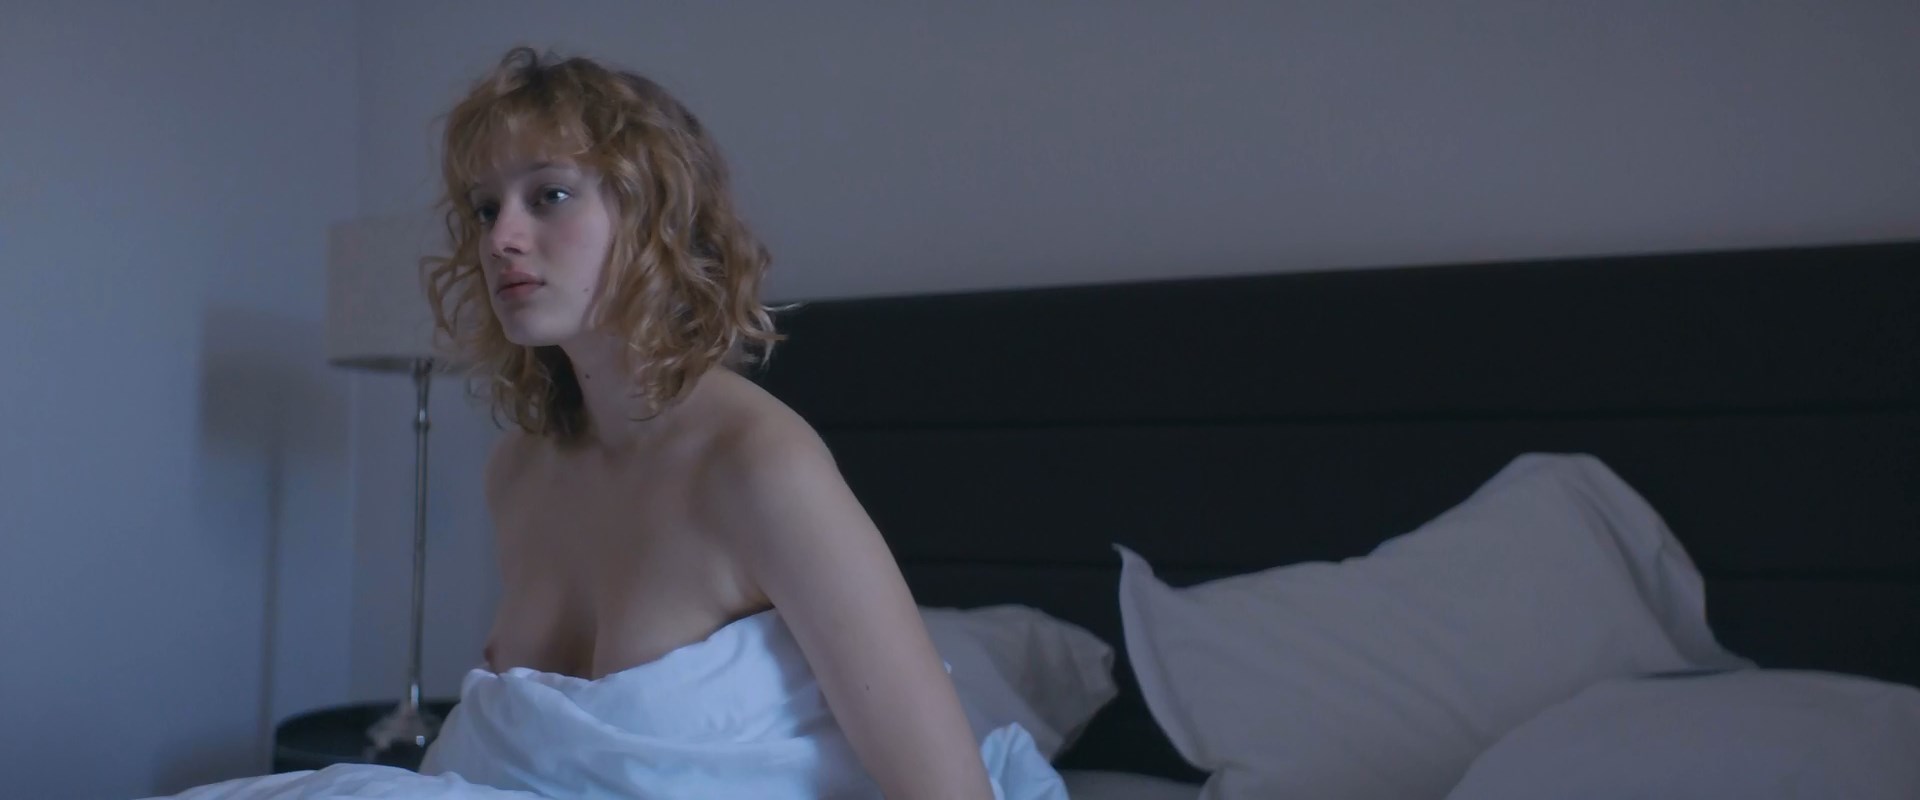 Porn Xnxx Nadeya 2019 - Nude video celebs Â» Nadia Tereszkiewicz nude, Valeria Bruni-Tedeschi nude,  Juliet Doucet nude - Seules les betes (2019)